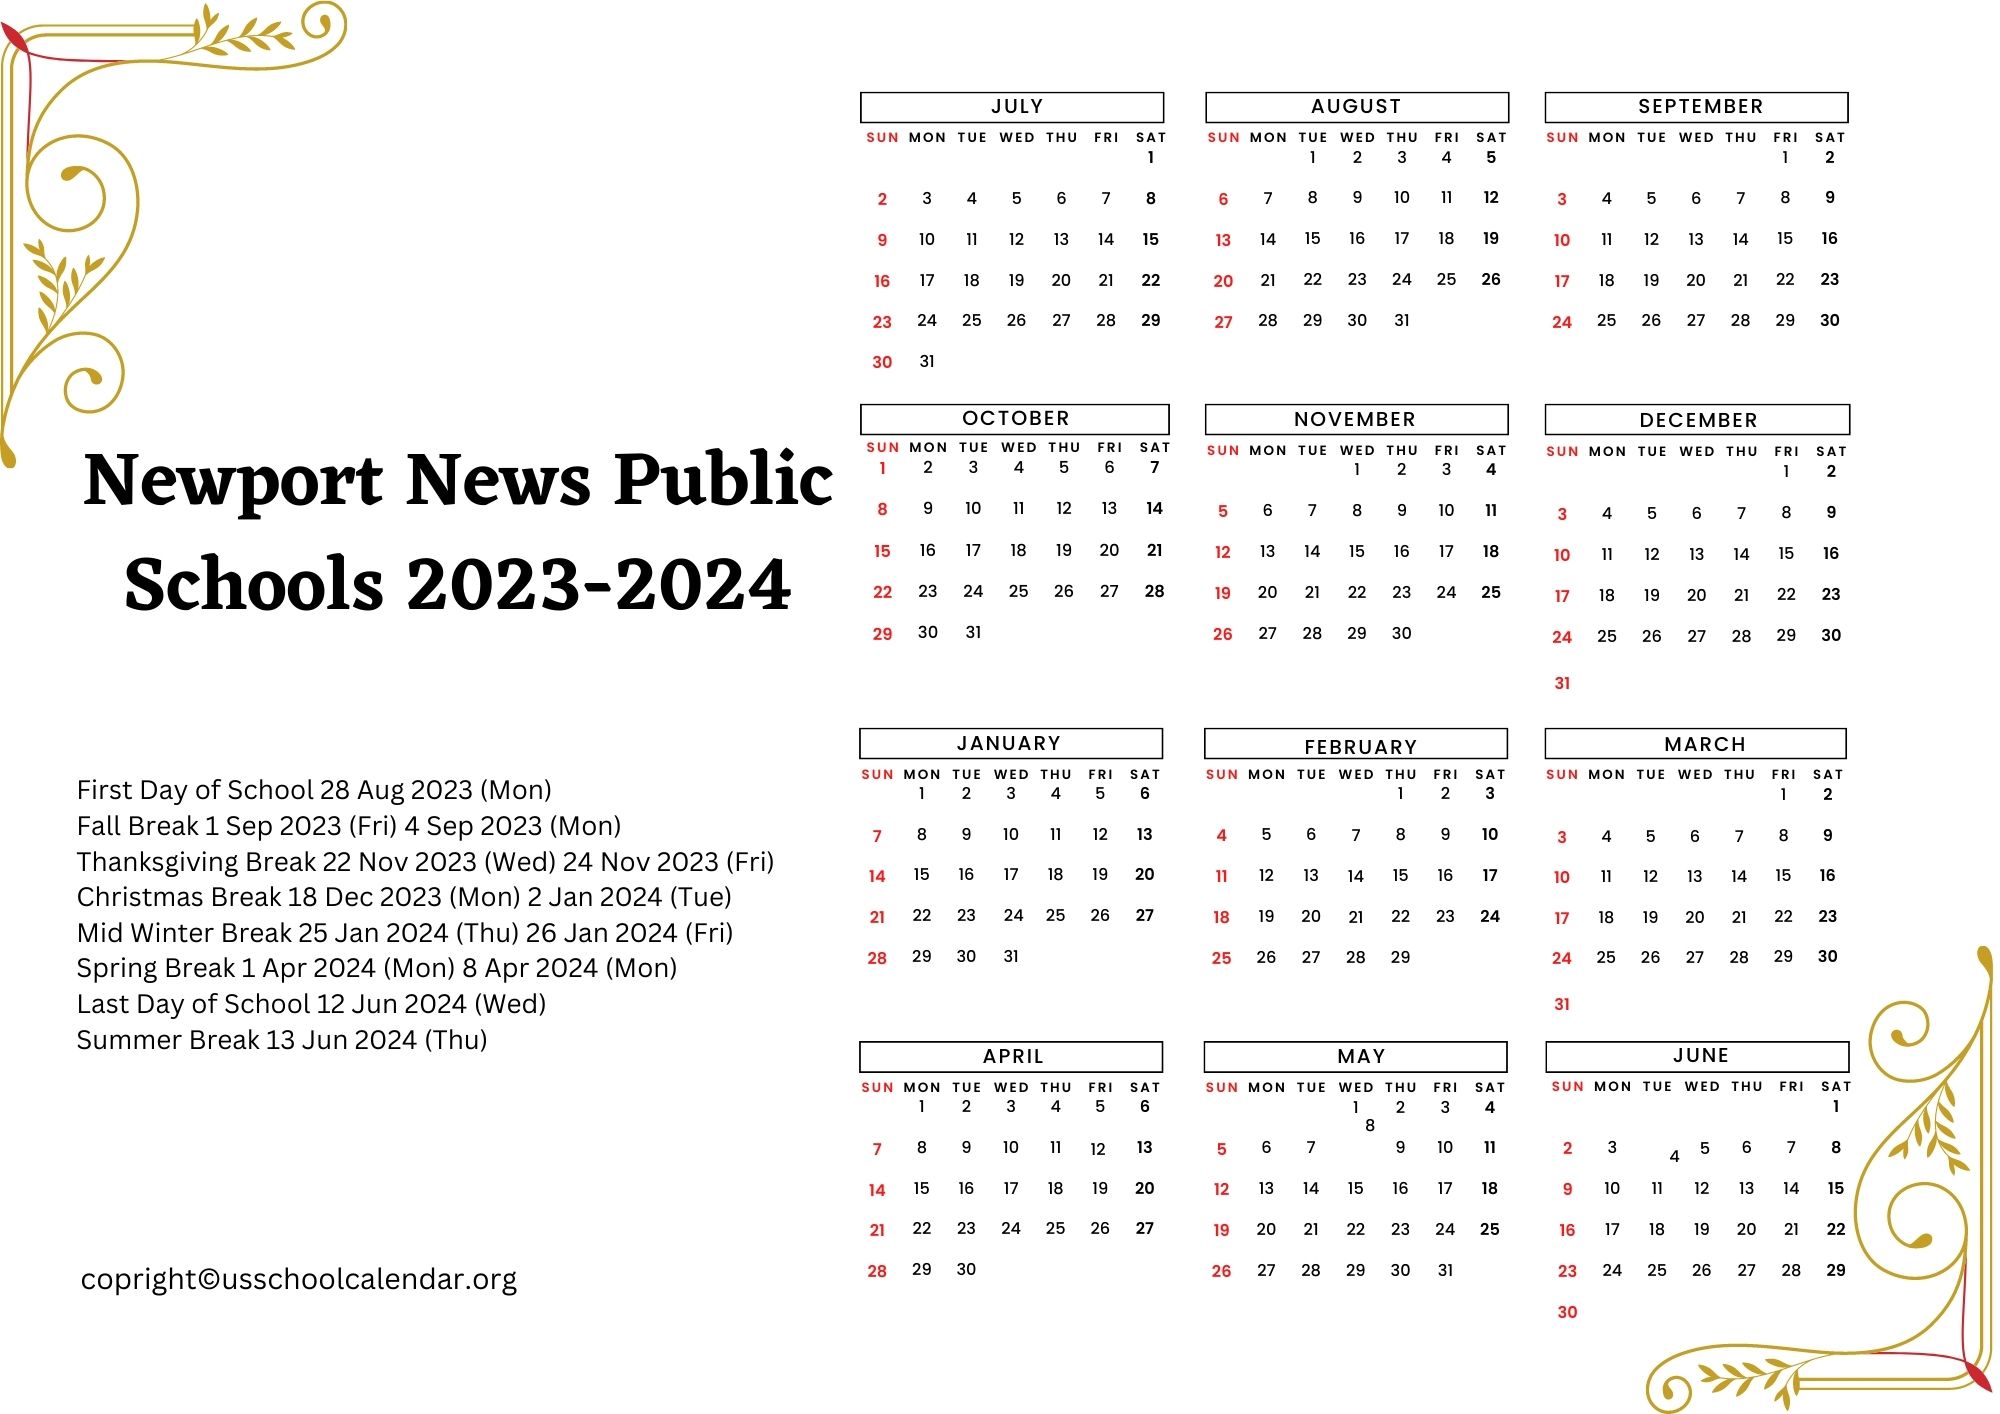 Newport News Public Schools Calendar with Holidays 20232024